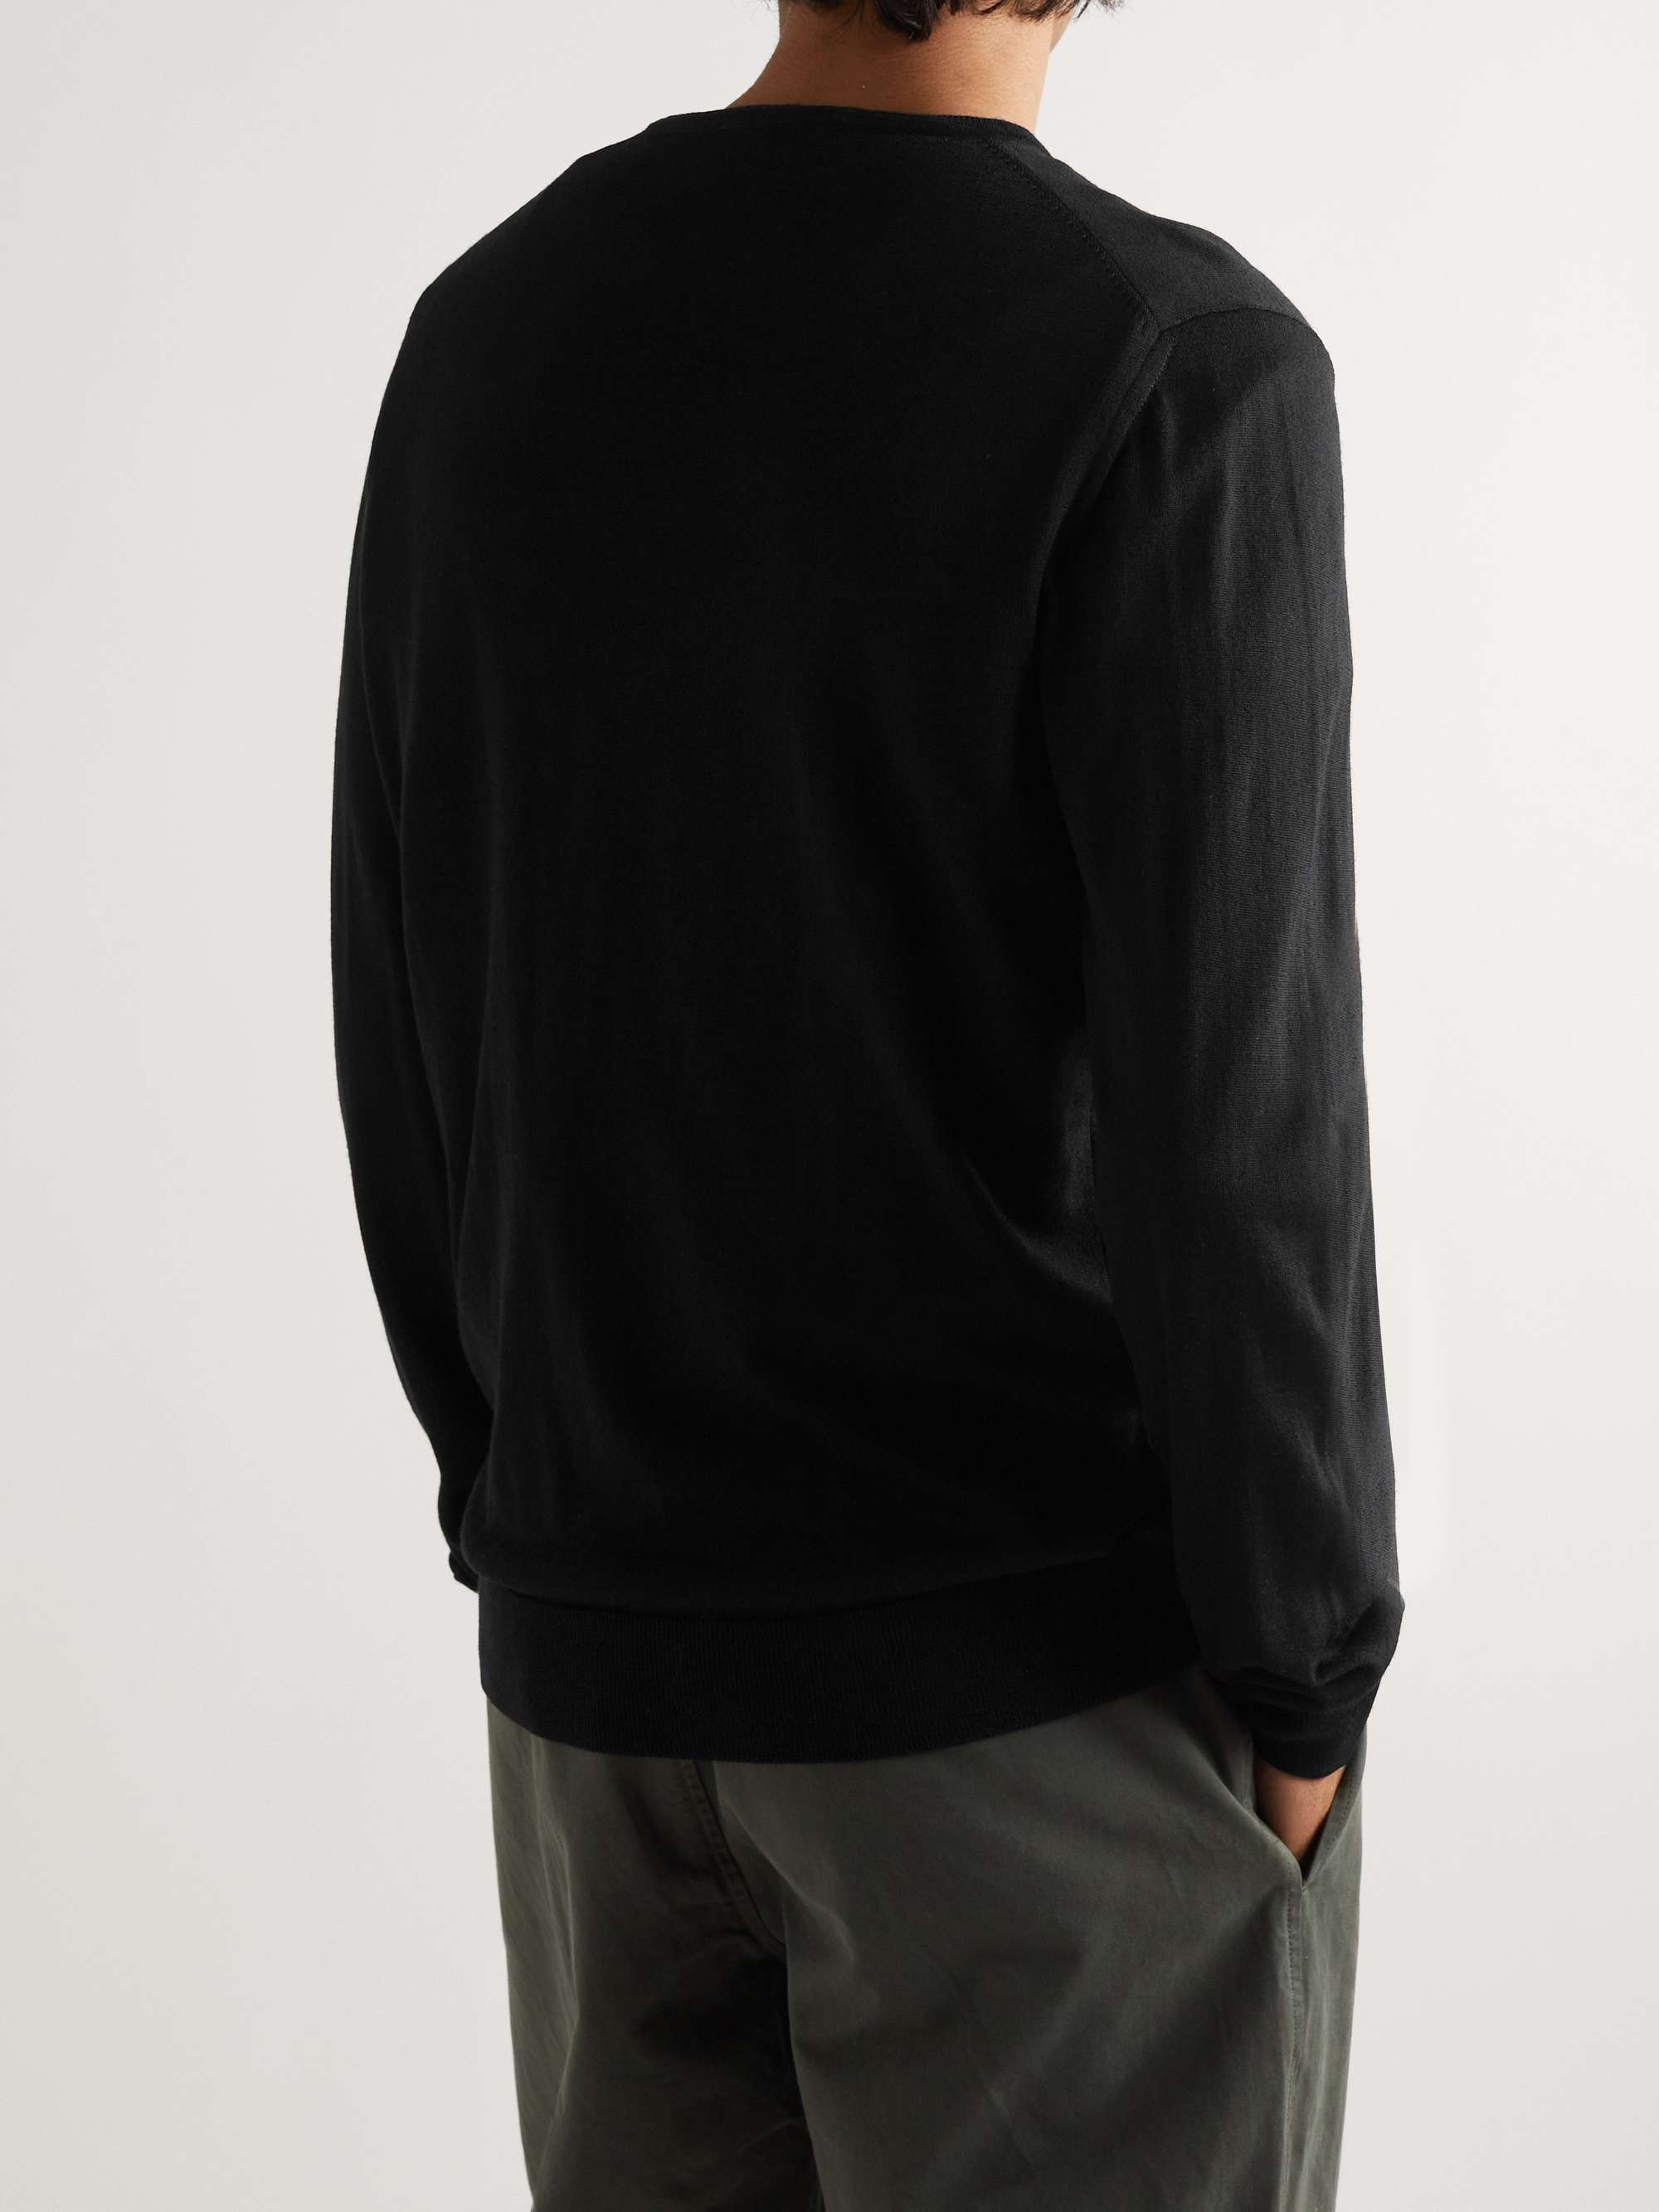 MR P. Slim-Fit Merino Wool Sweater